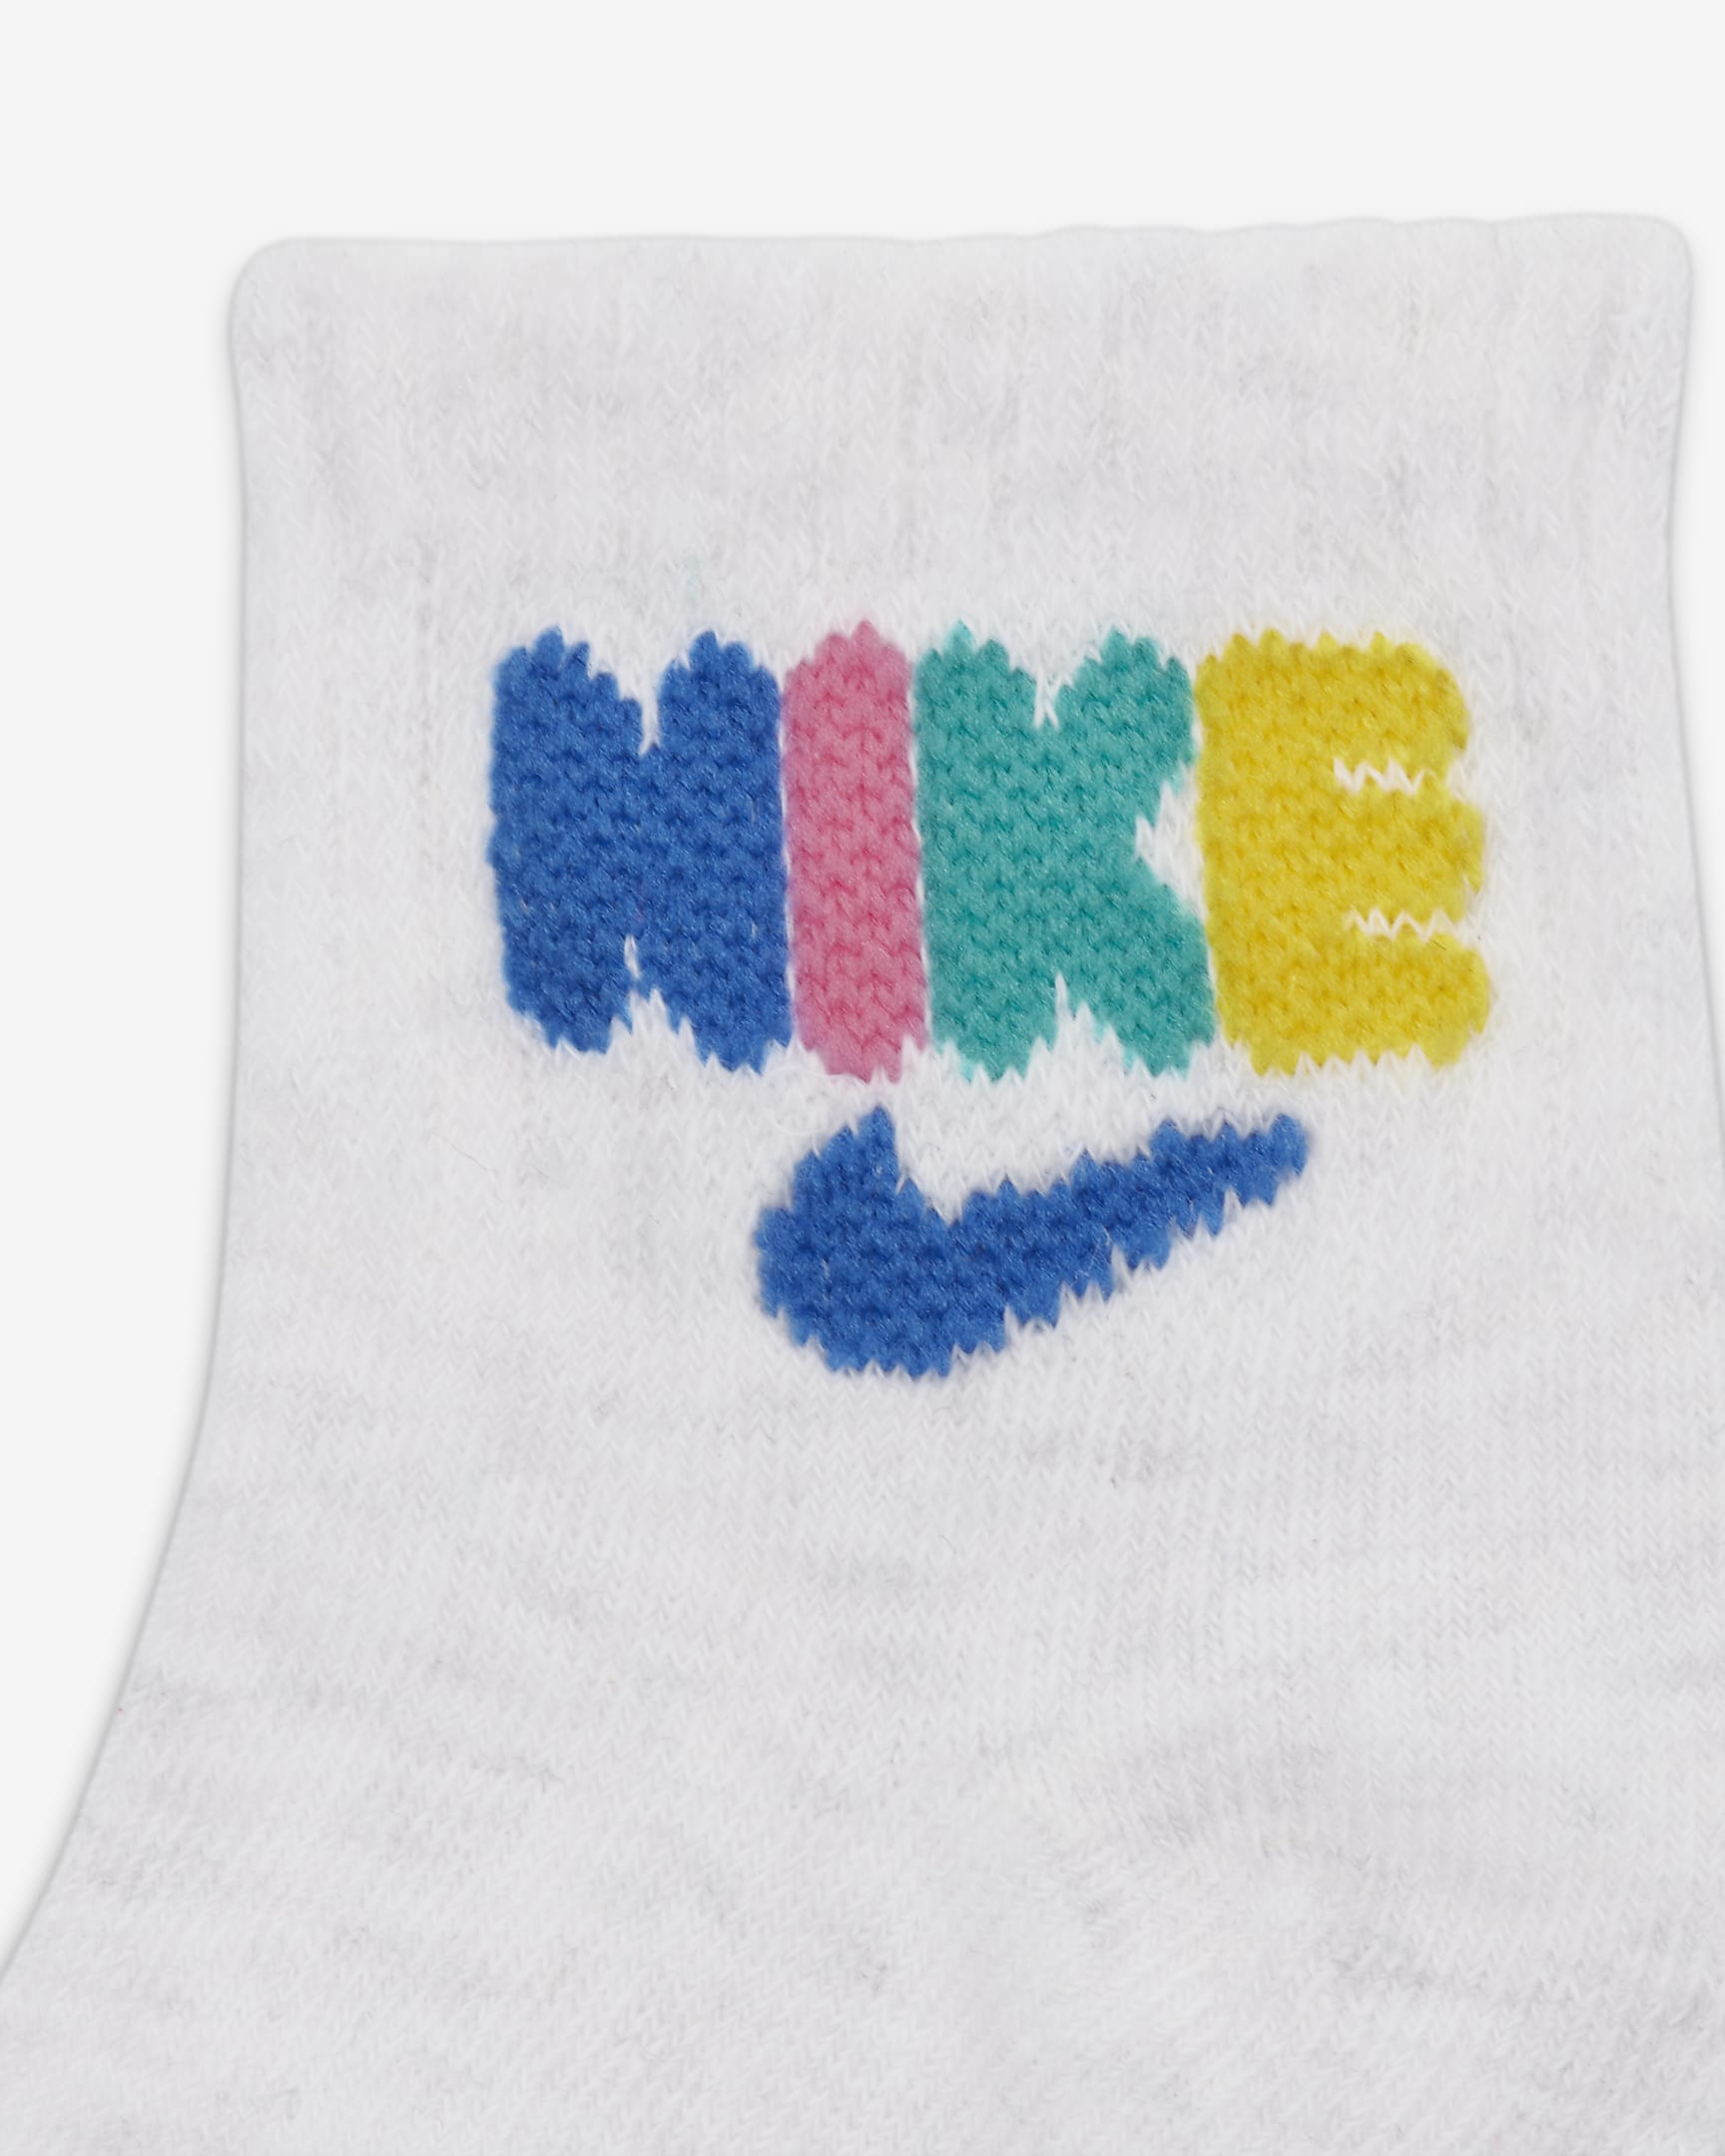 Nike Primary Play Socks (6 Pairs) Baby Socks. Nike.com